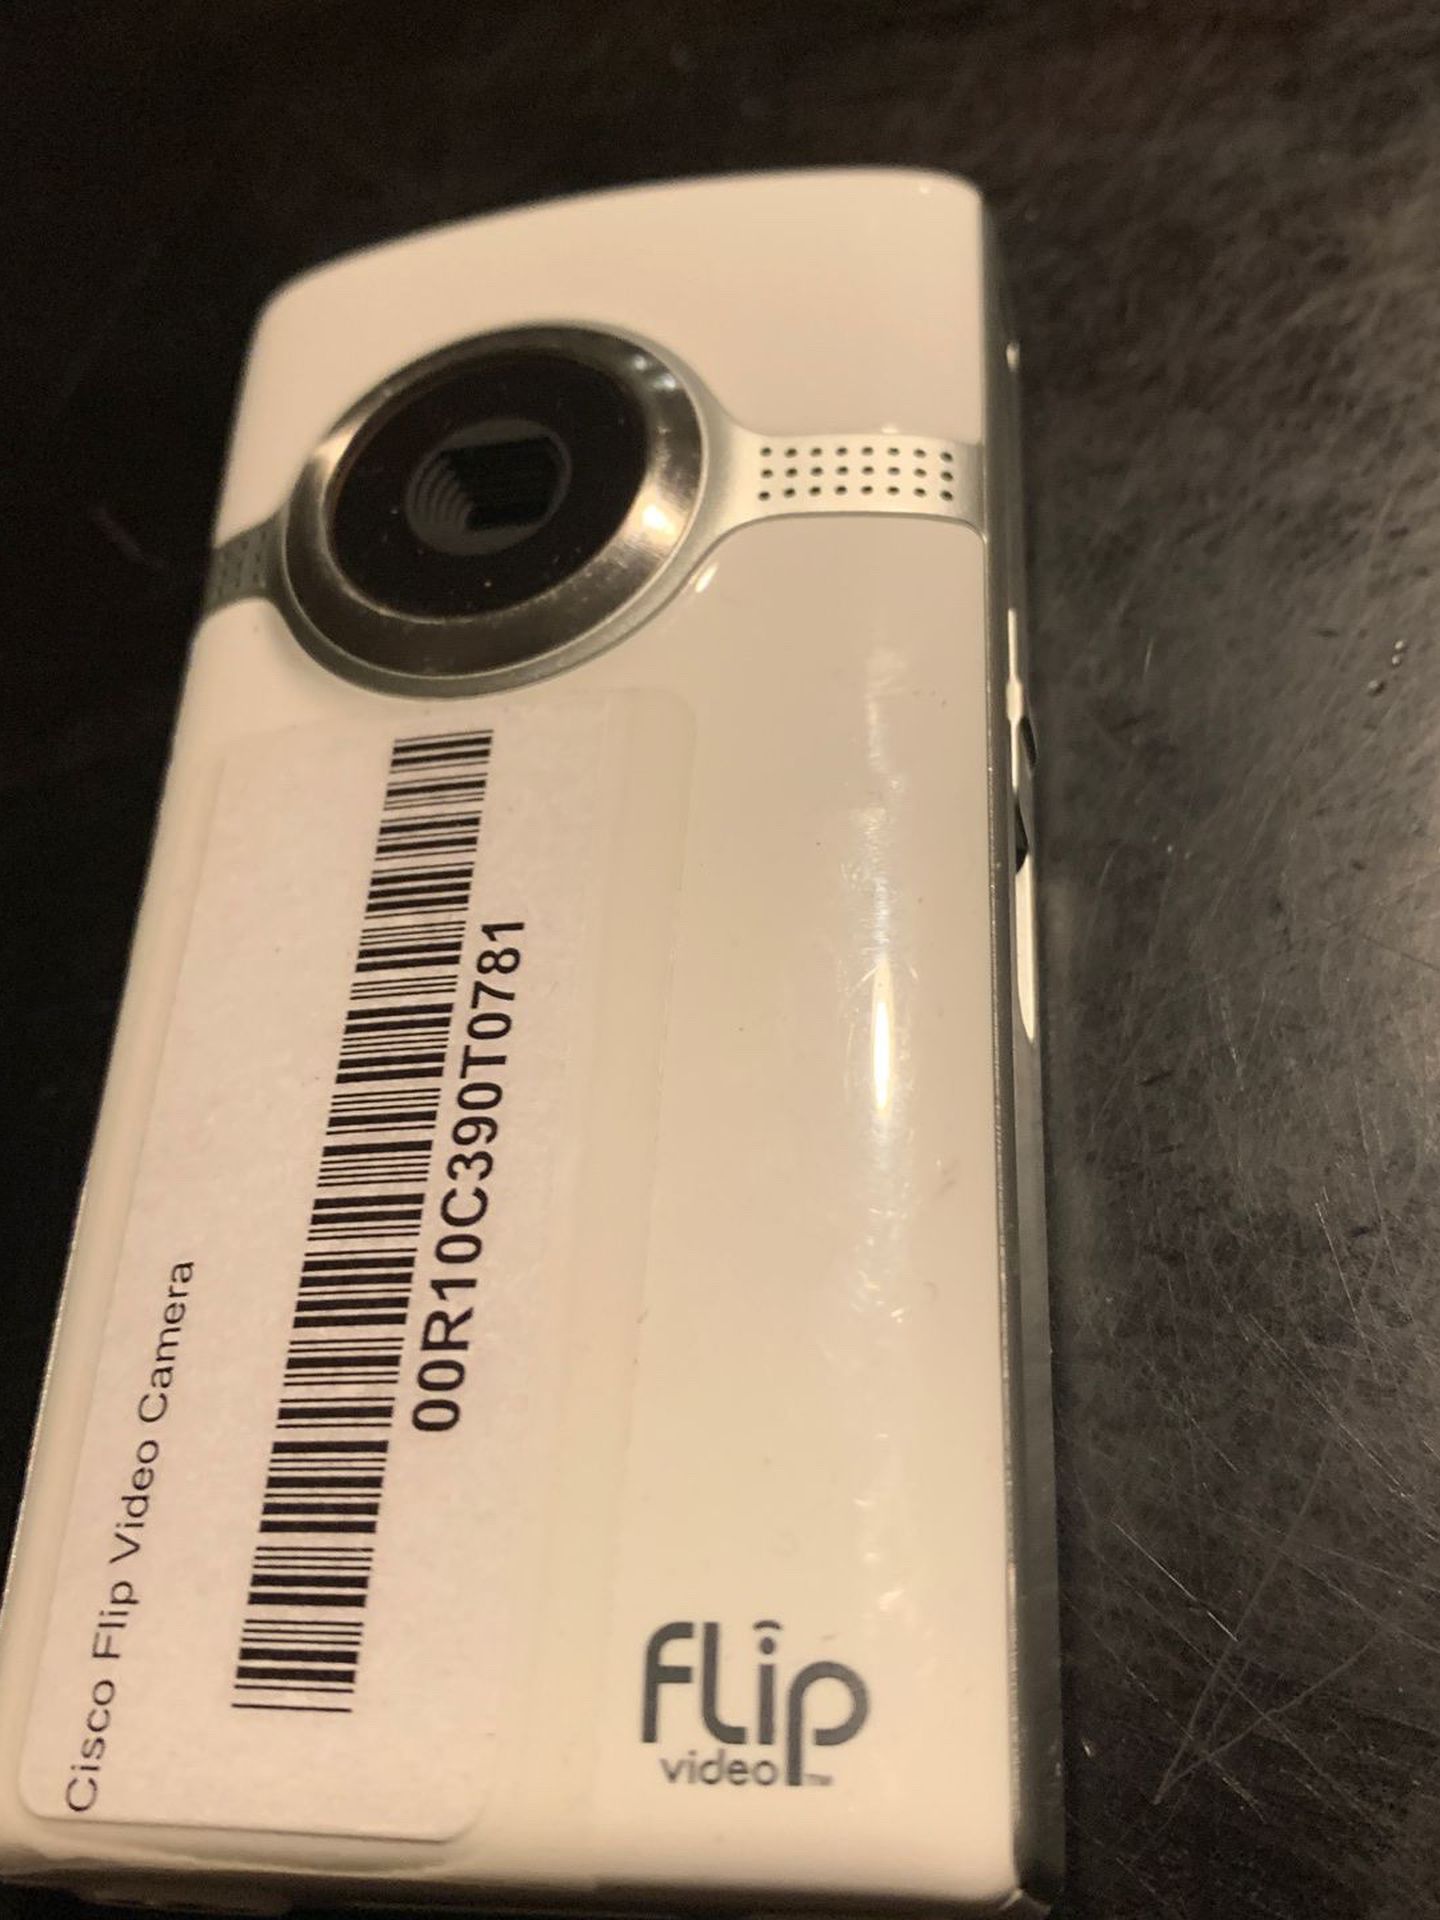 Flip ultra Hd camera (Excellent condition)